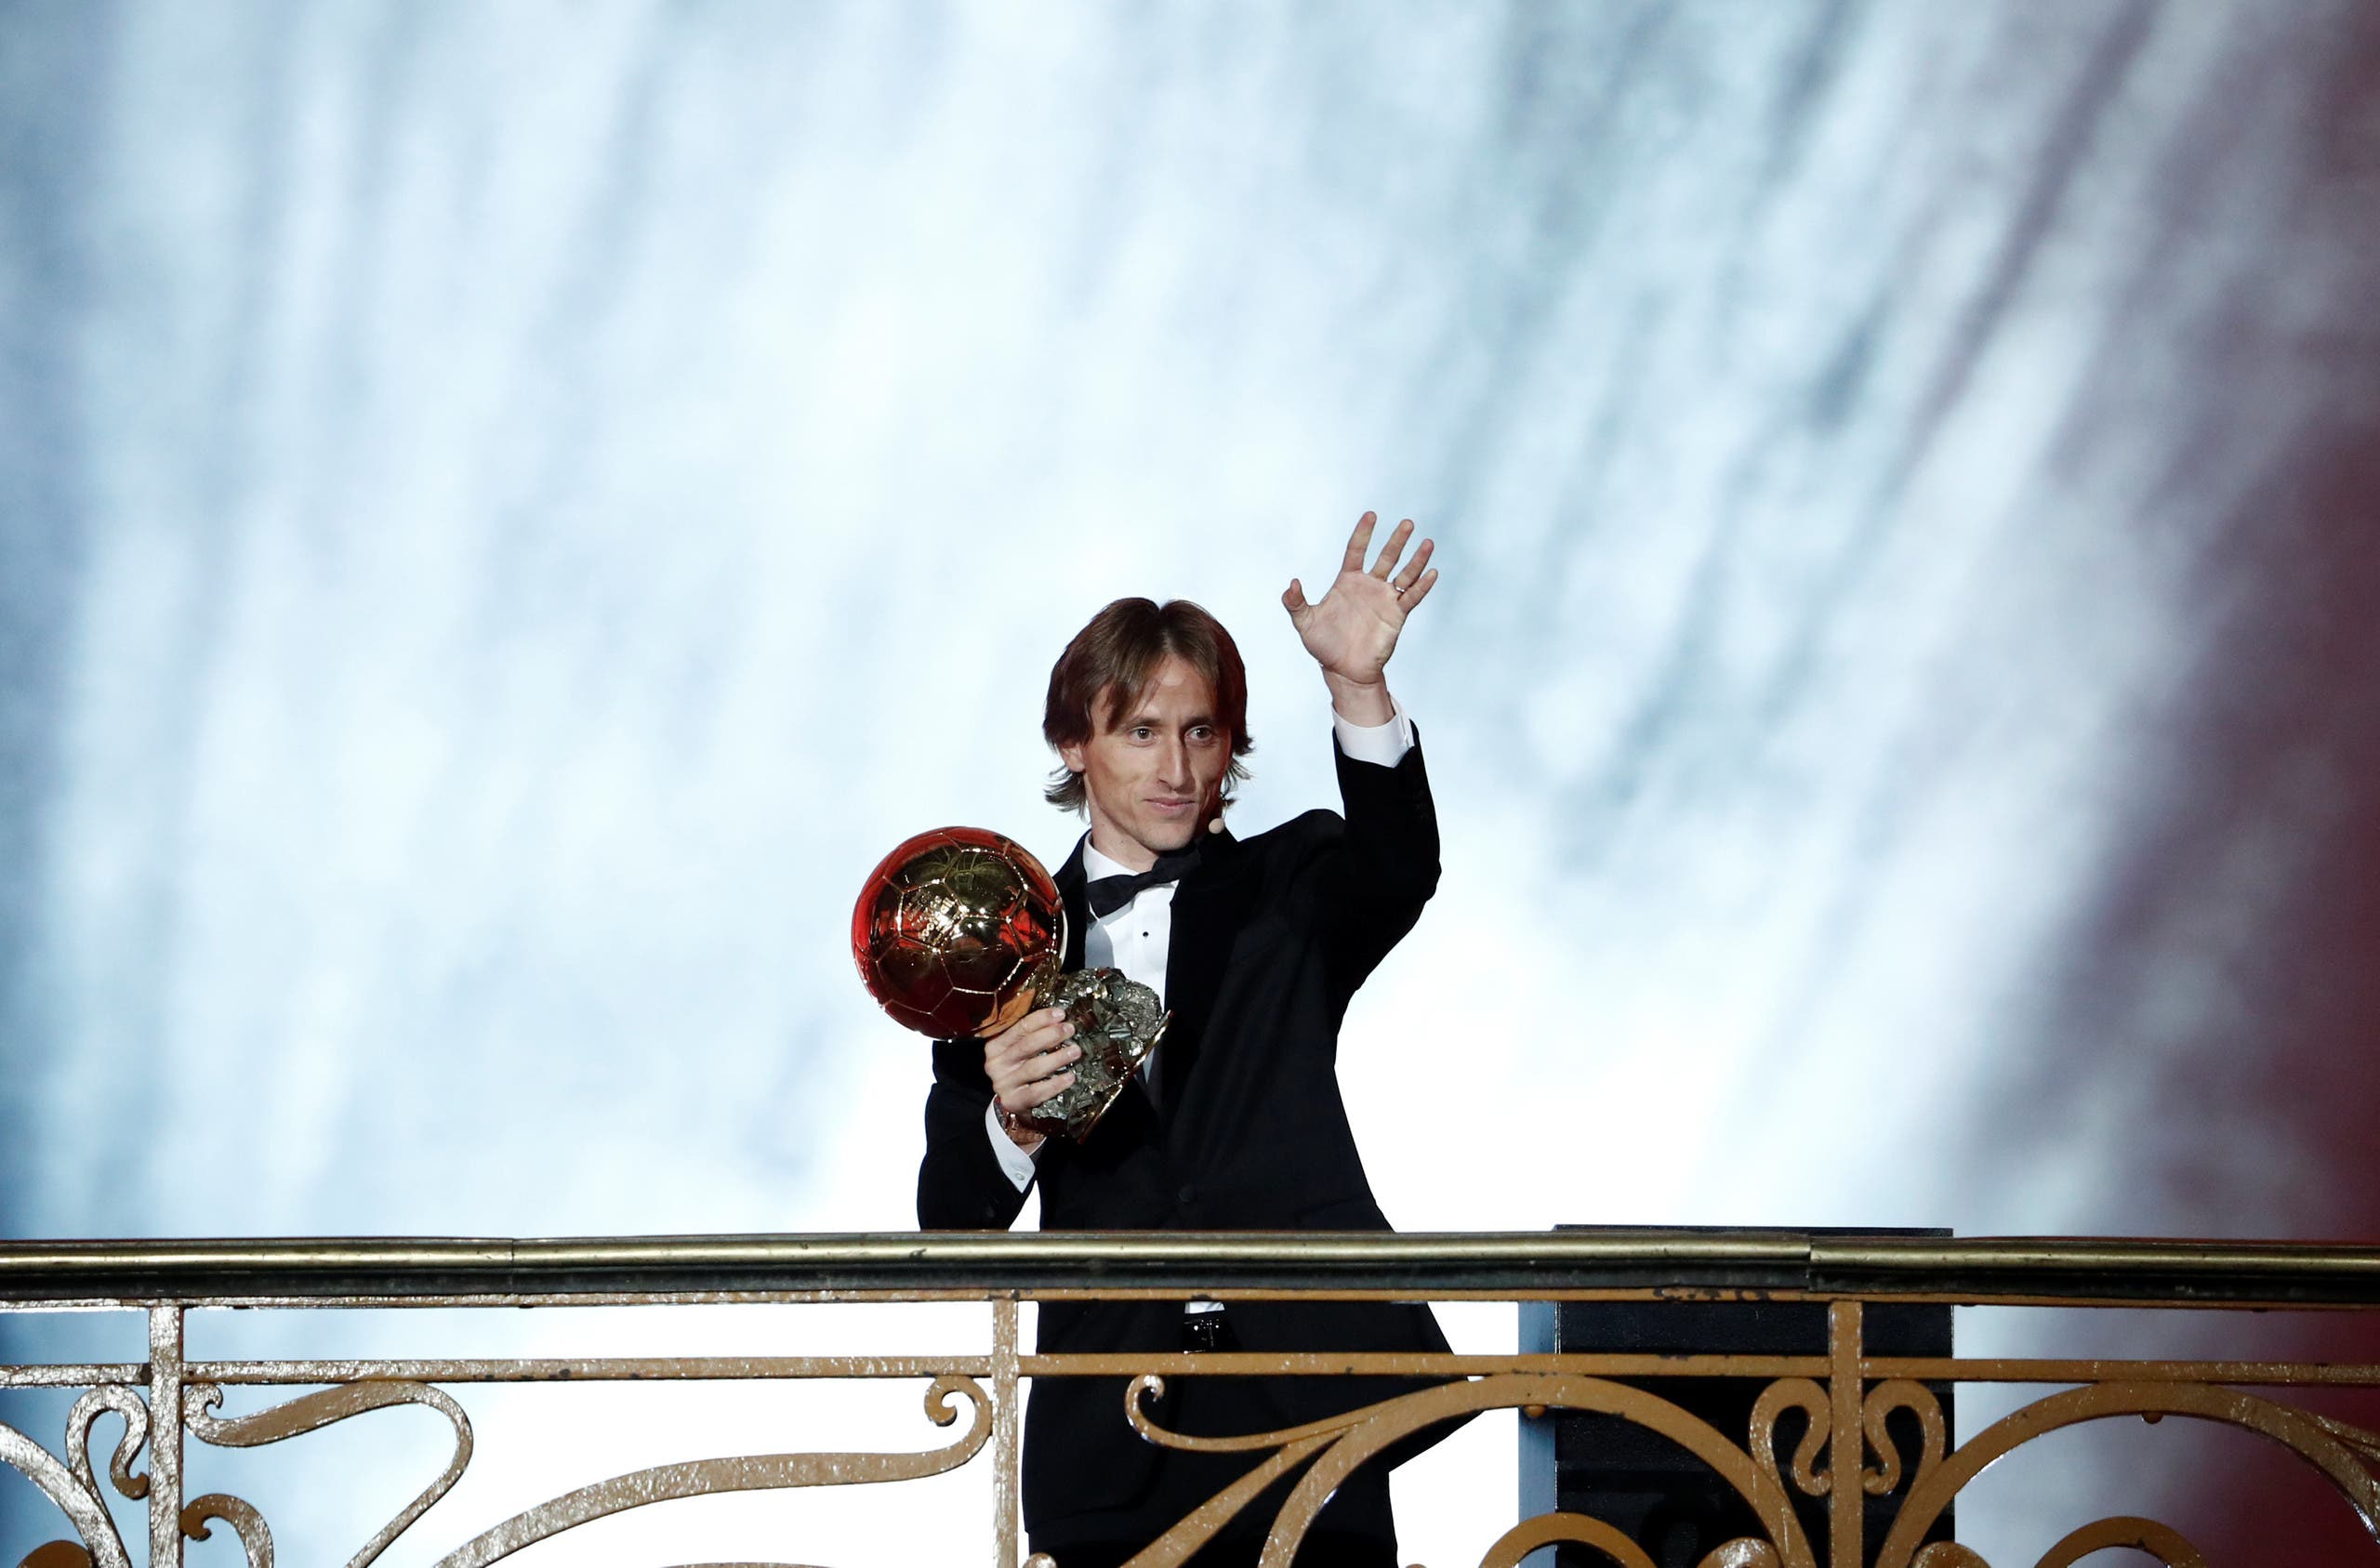 Modric holding the Ballon d'Or